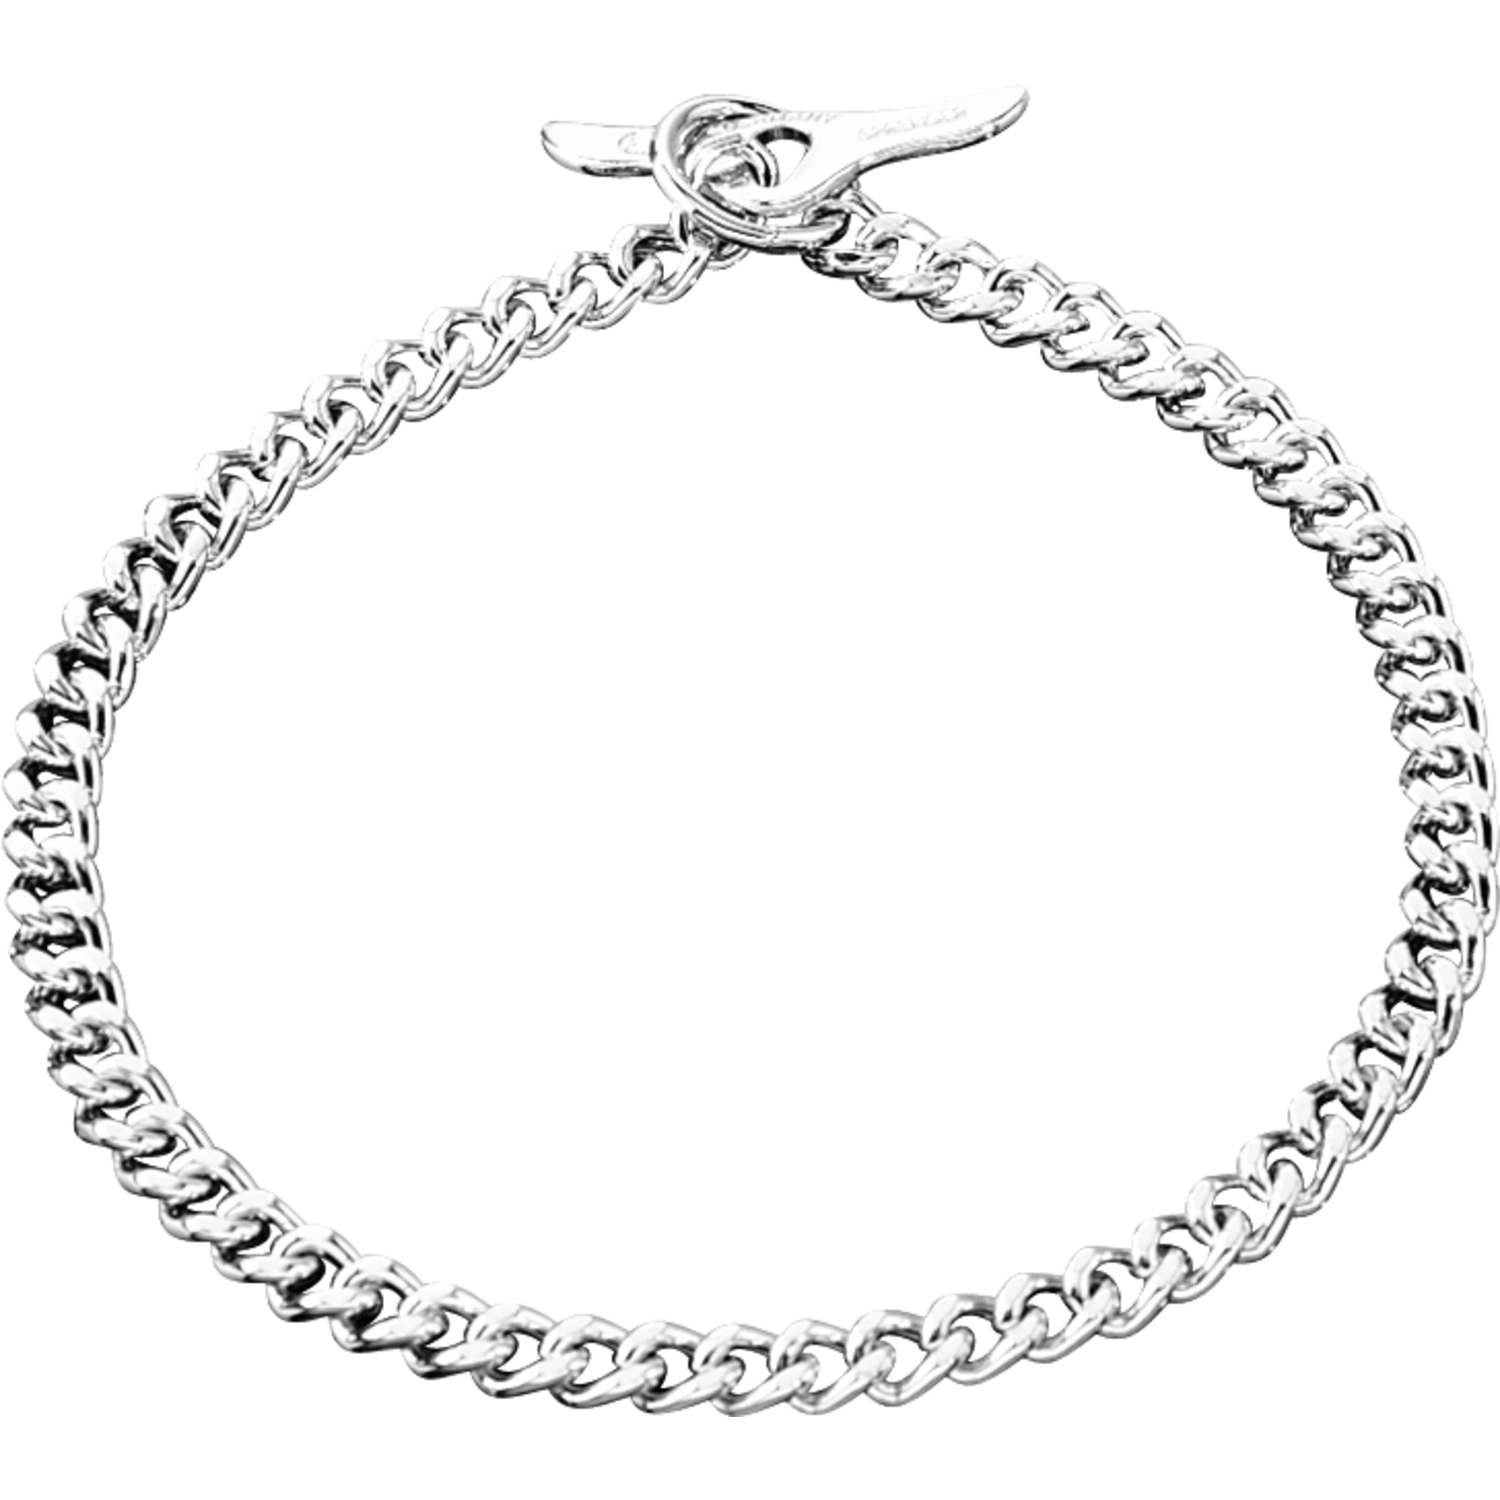 Flat Narrow Chain Link Collar (Steel Chrome-Plated) - 3mm